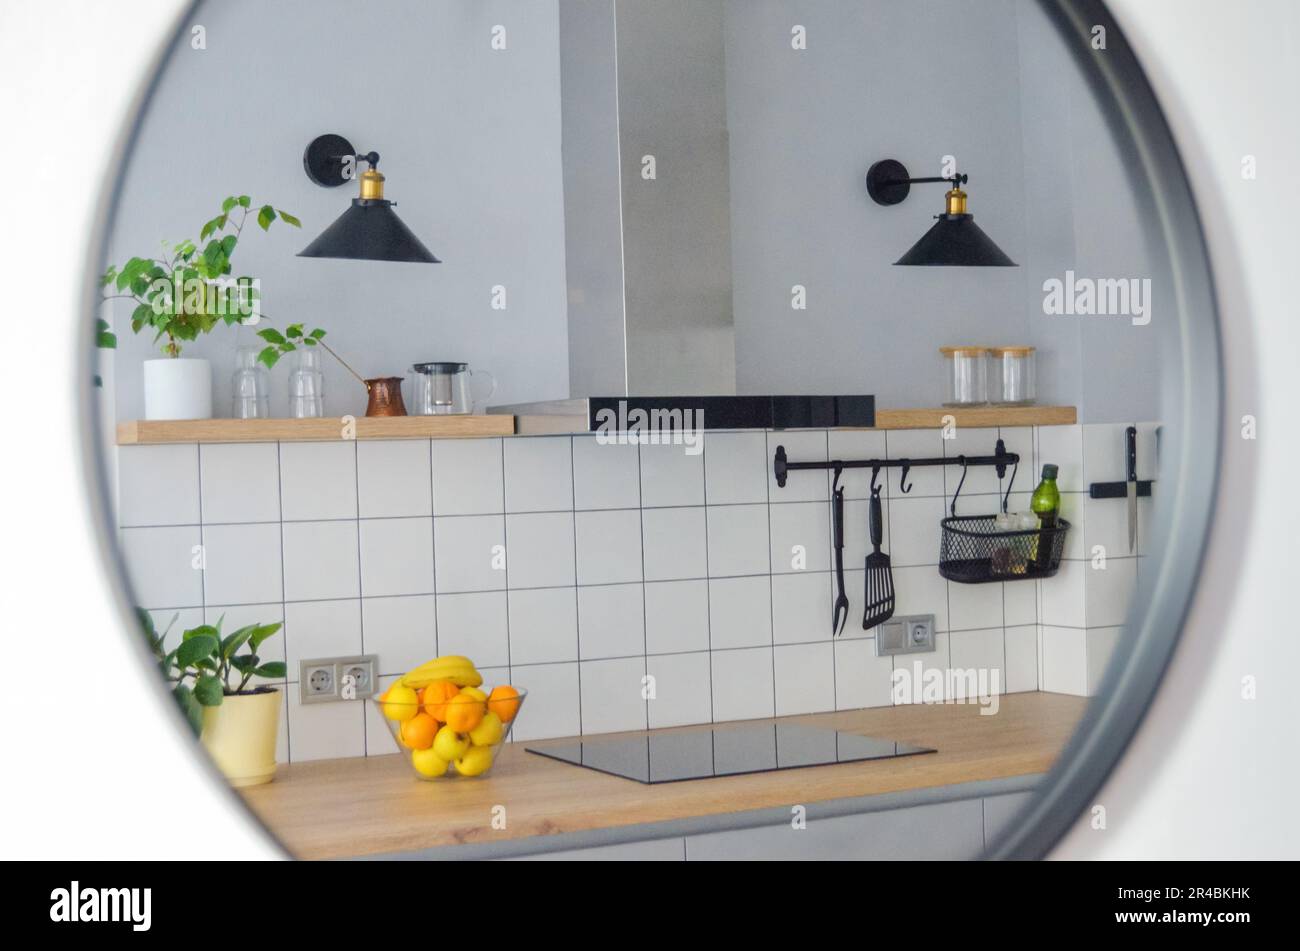 https://c8.alamy.com/comp/2R4BKHK/modern-stylish-scandinavian-kitchen-interior-with-kitchen-accessories-bright-white-and-grey-kitchen-with-household-items-in-studio-apartment-2R4BKHK.jpg